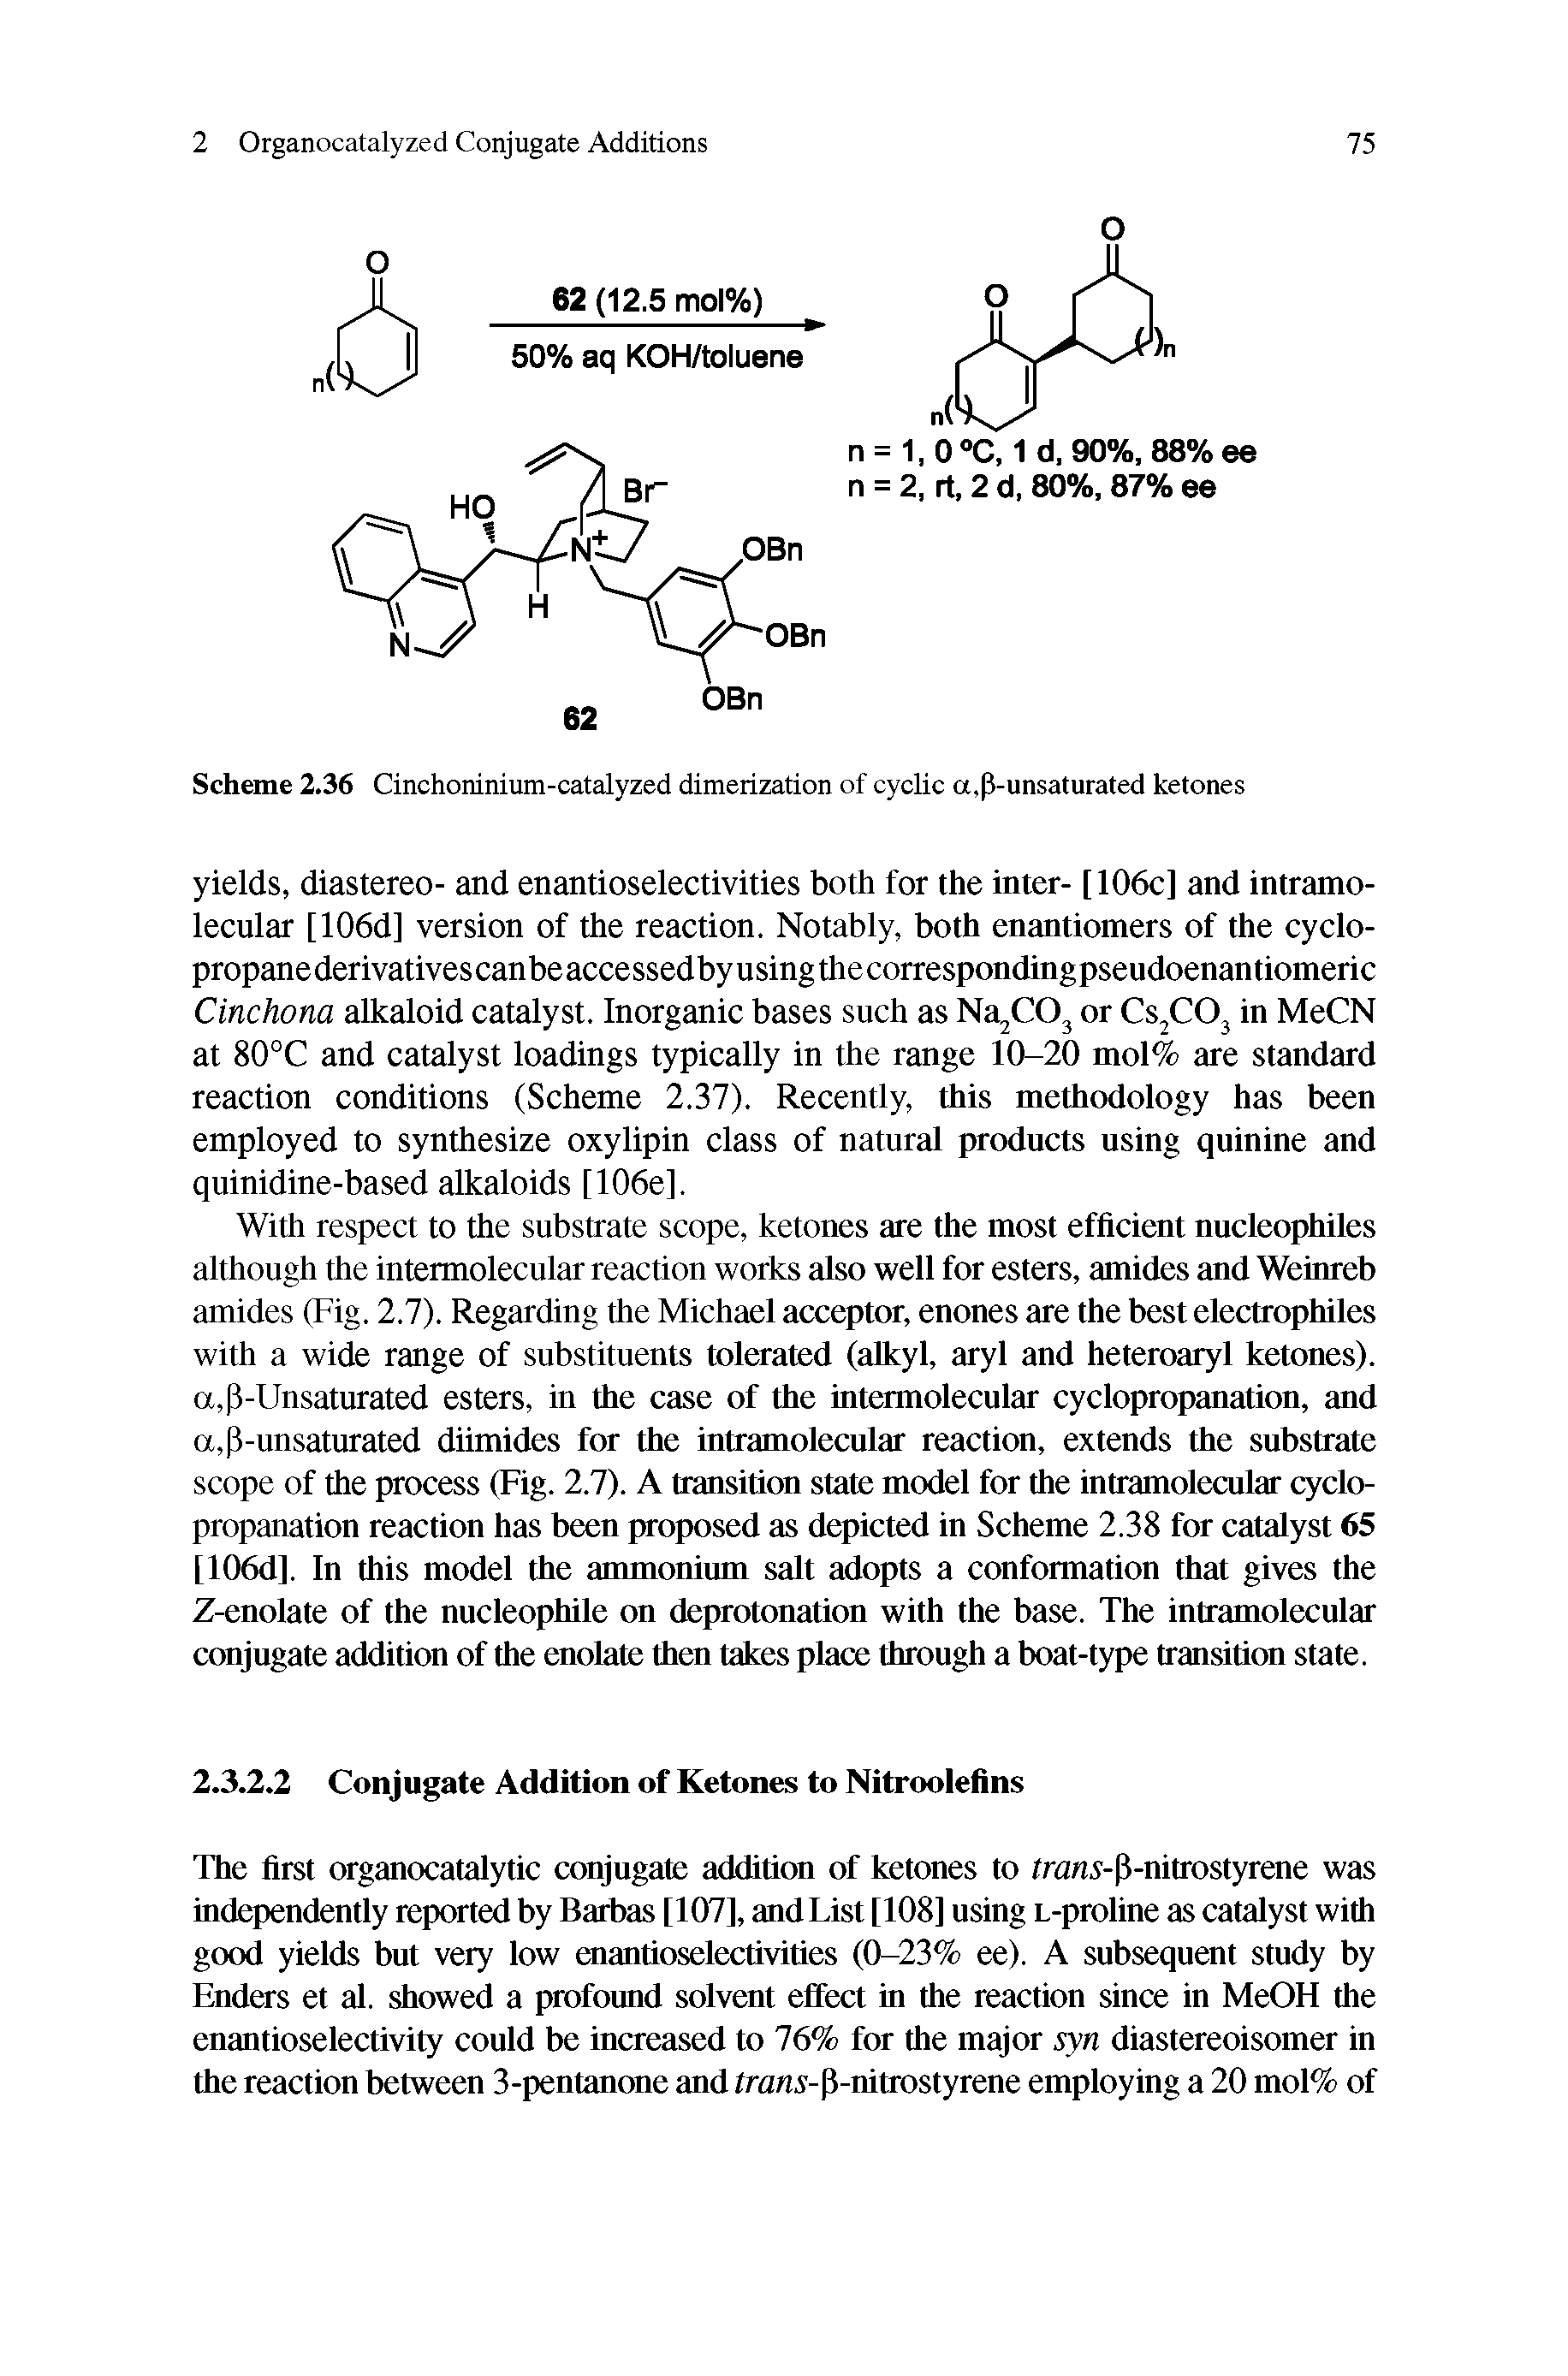 Scheme 2.36 Cinchoninium-catalyzed dimerization of cyclic a,p-unsaturated ketones...